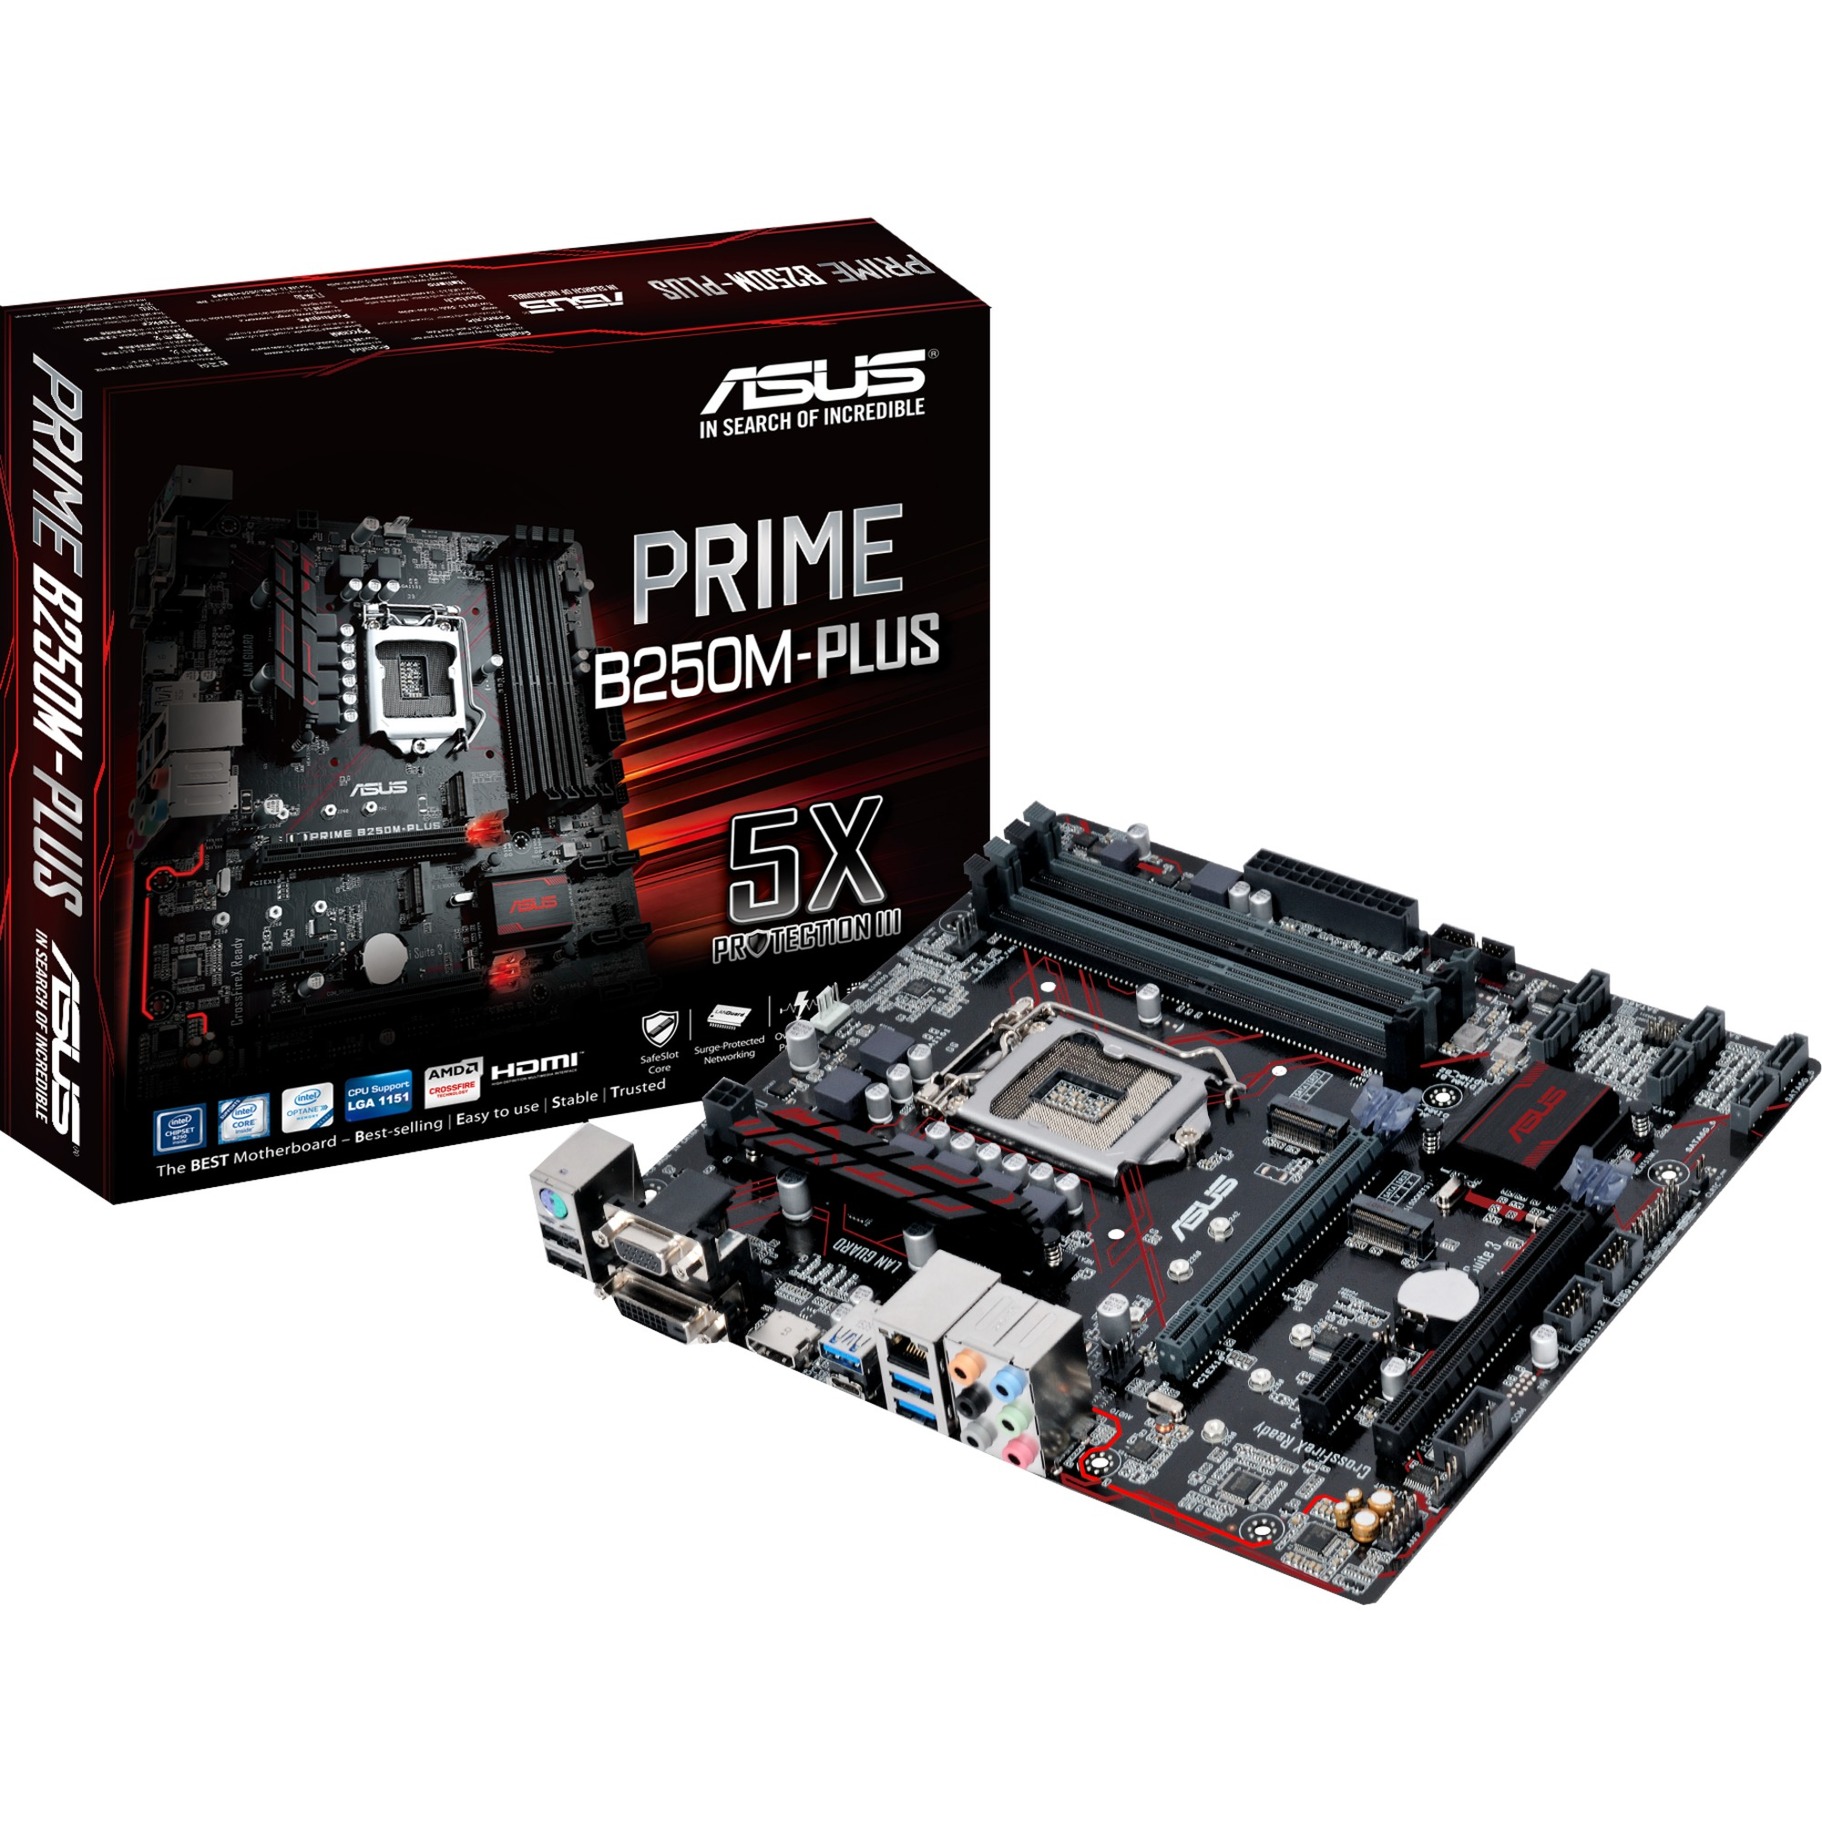 PRIME B250M-PLUS LGA 1151 (Socket H4) Intel B250 micro ATX, Płyta główna